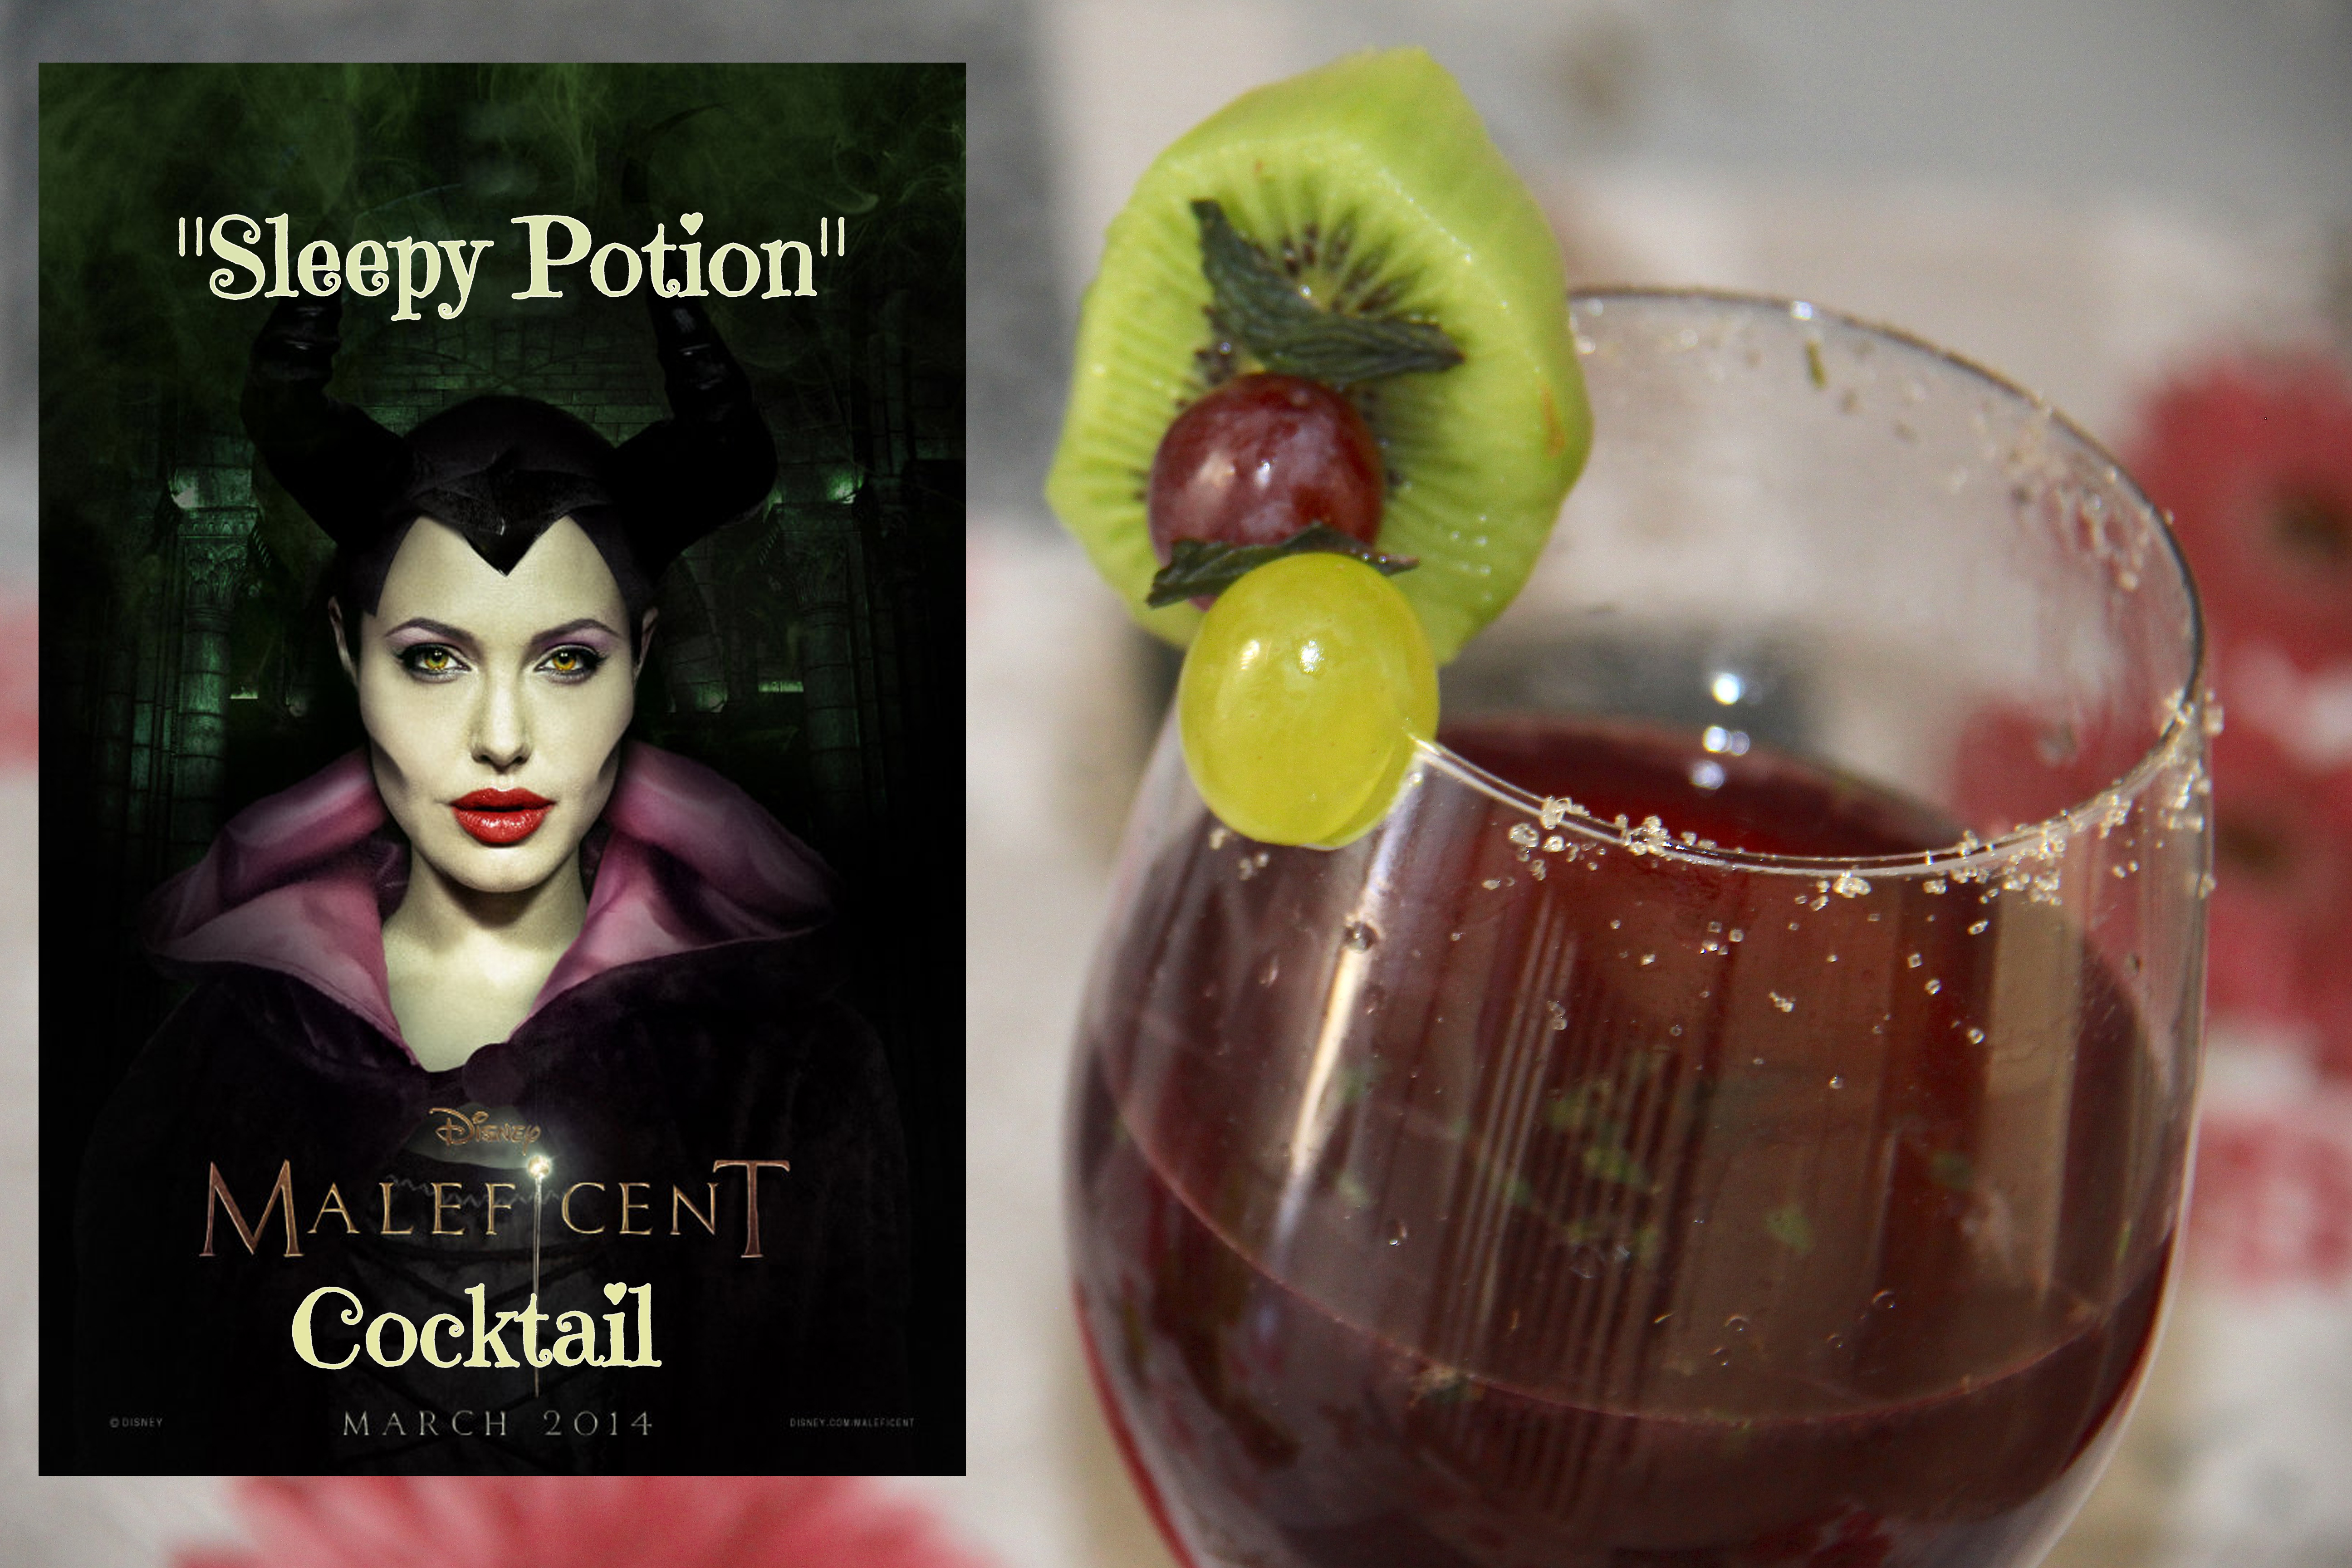 Maleficent Cocktail "Sleepy Potion"